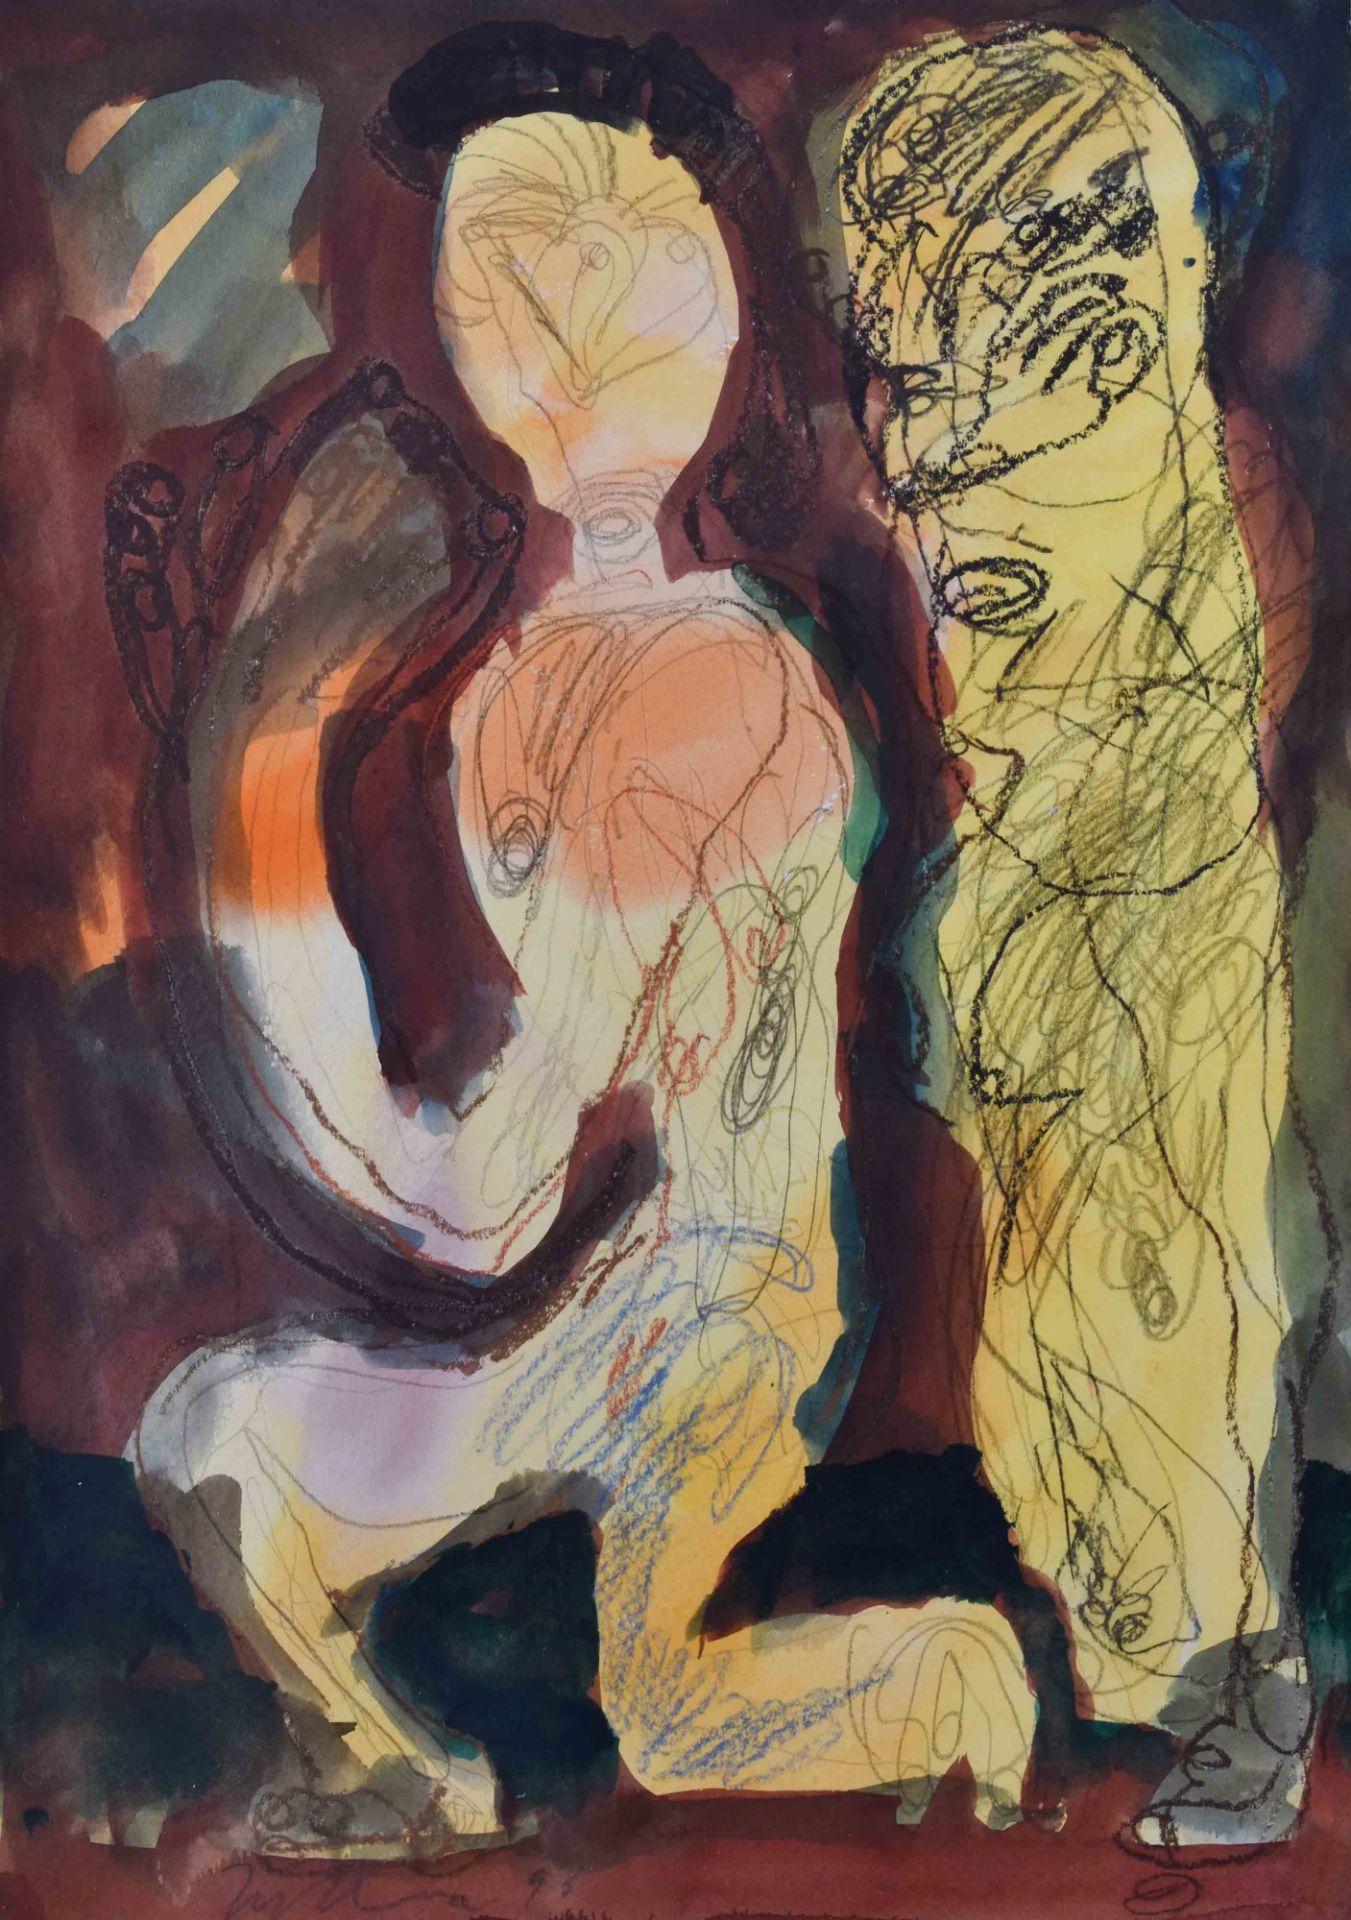 Klaus ZYLLA (1953)"Maria Caroga II"drawing-watercolor chalk, pencil, visible size 34 cm x 24 cm,